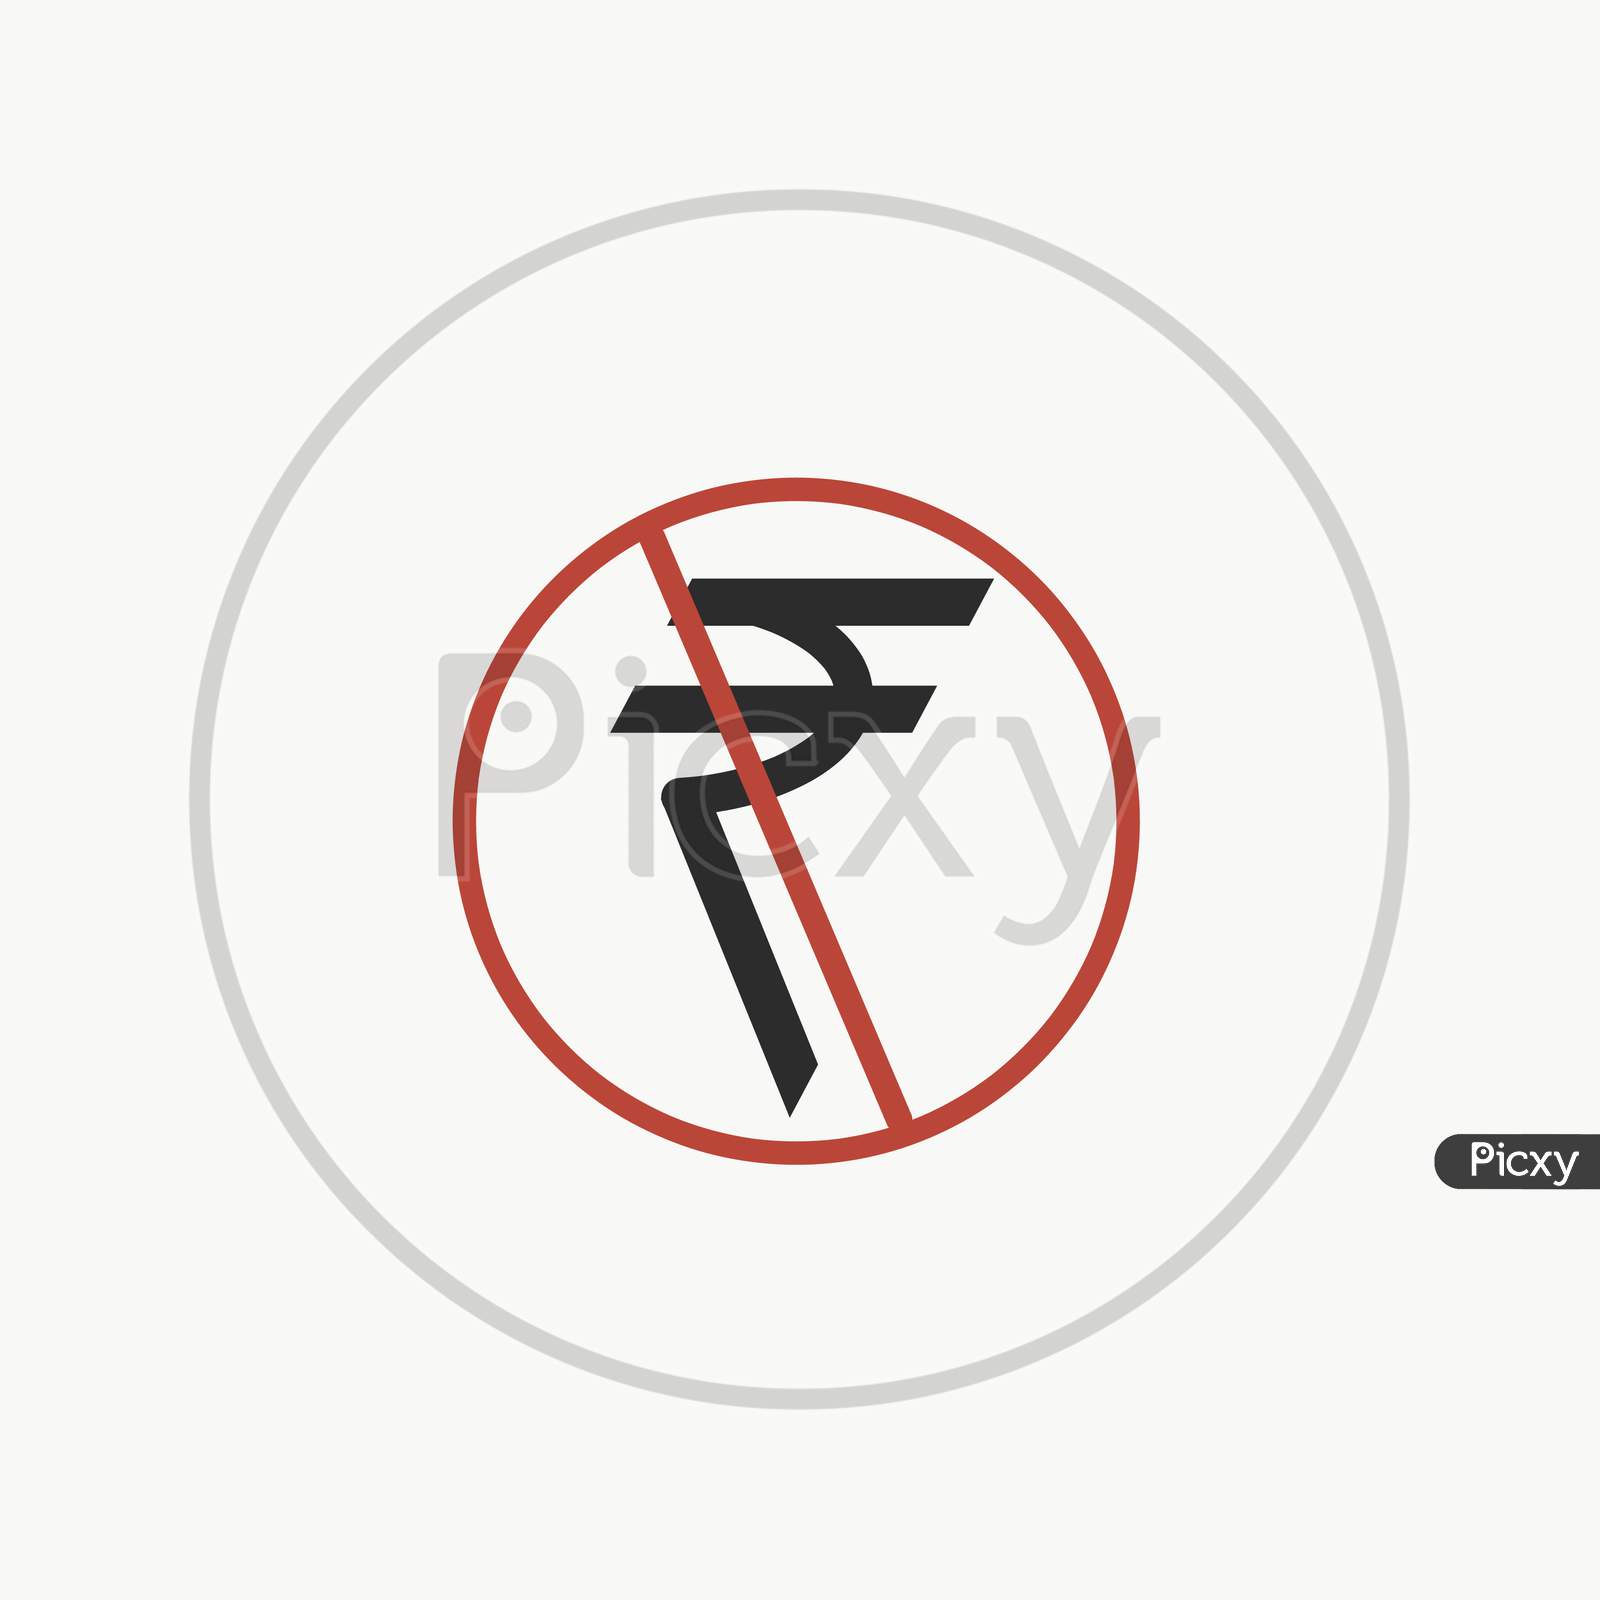 No Rupee Sign Illustration Image